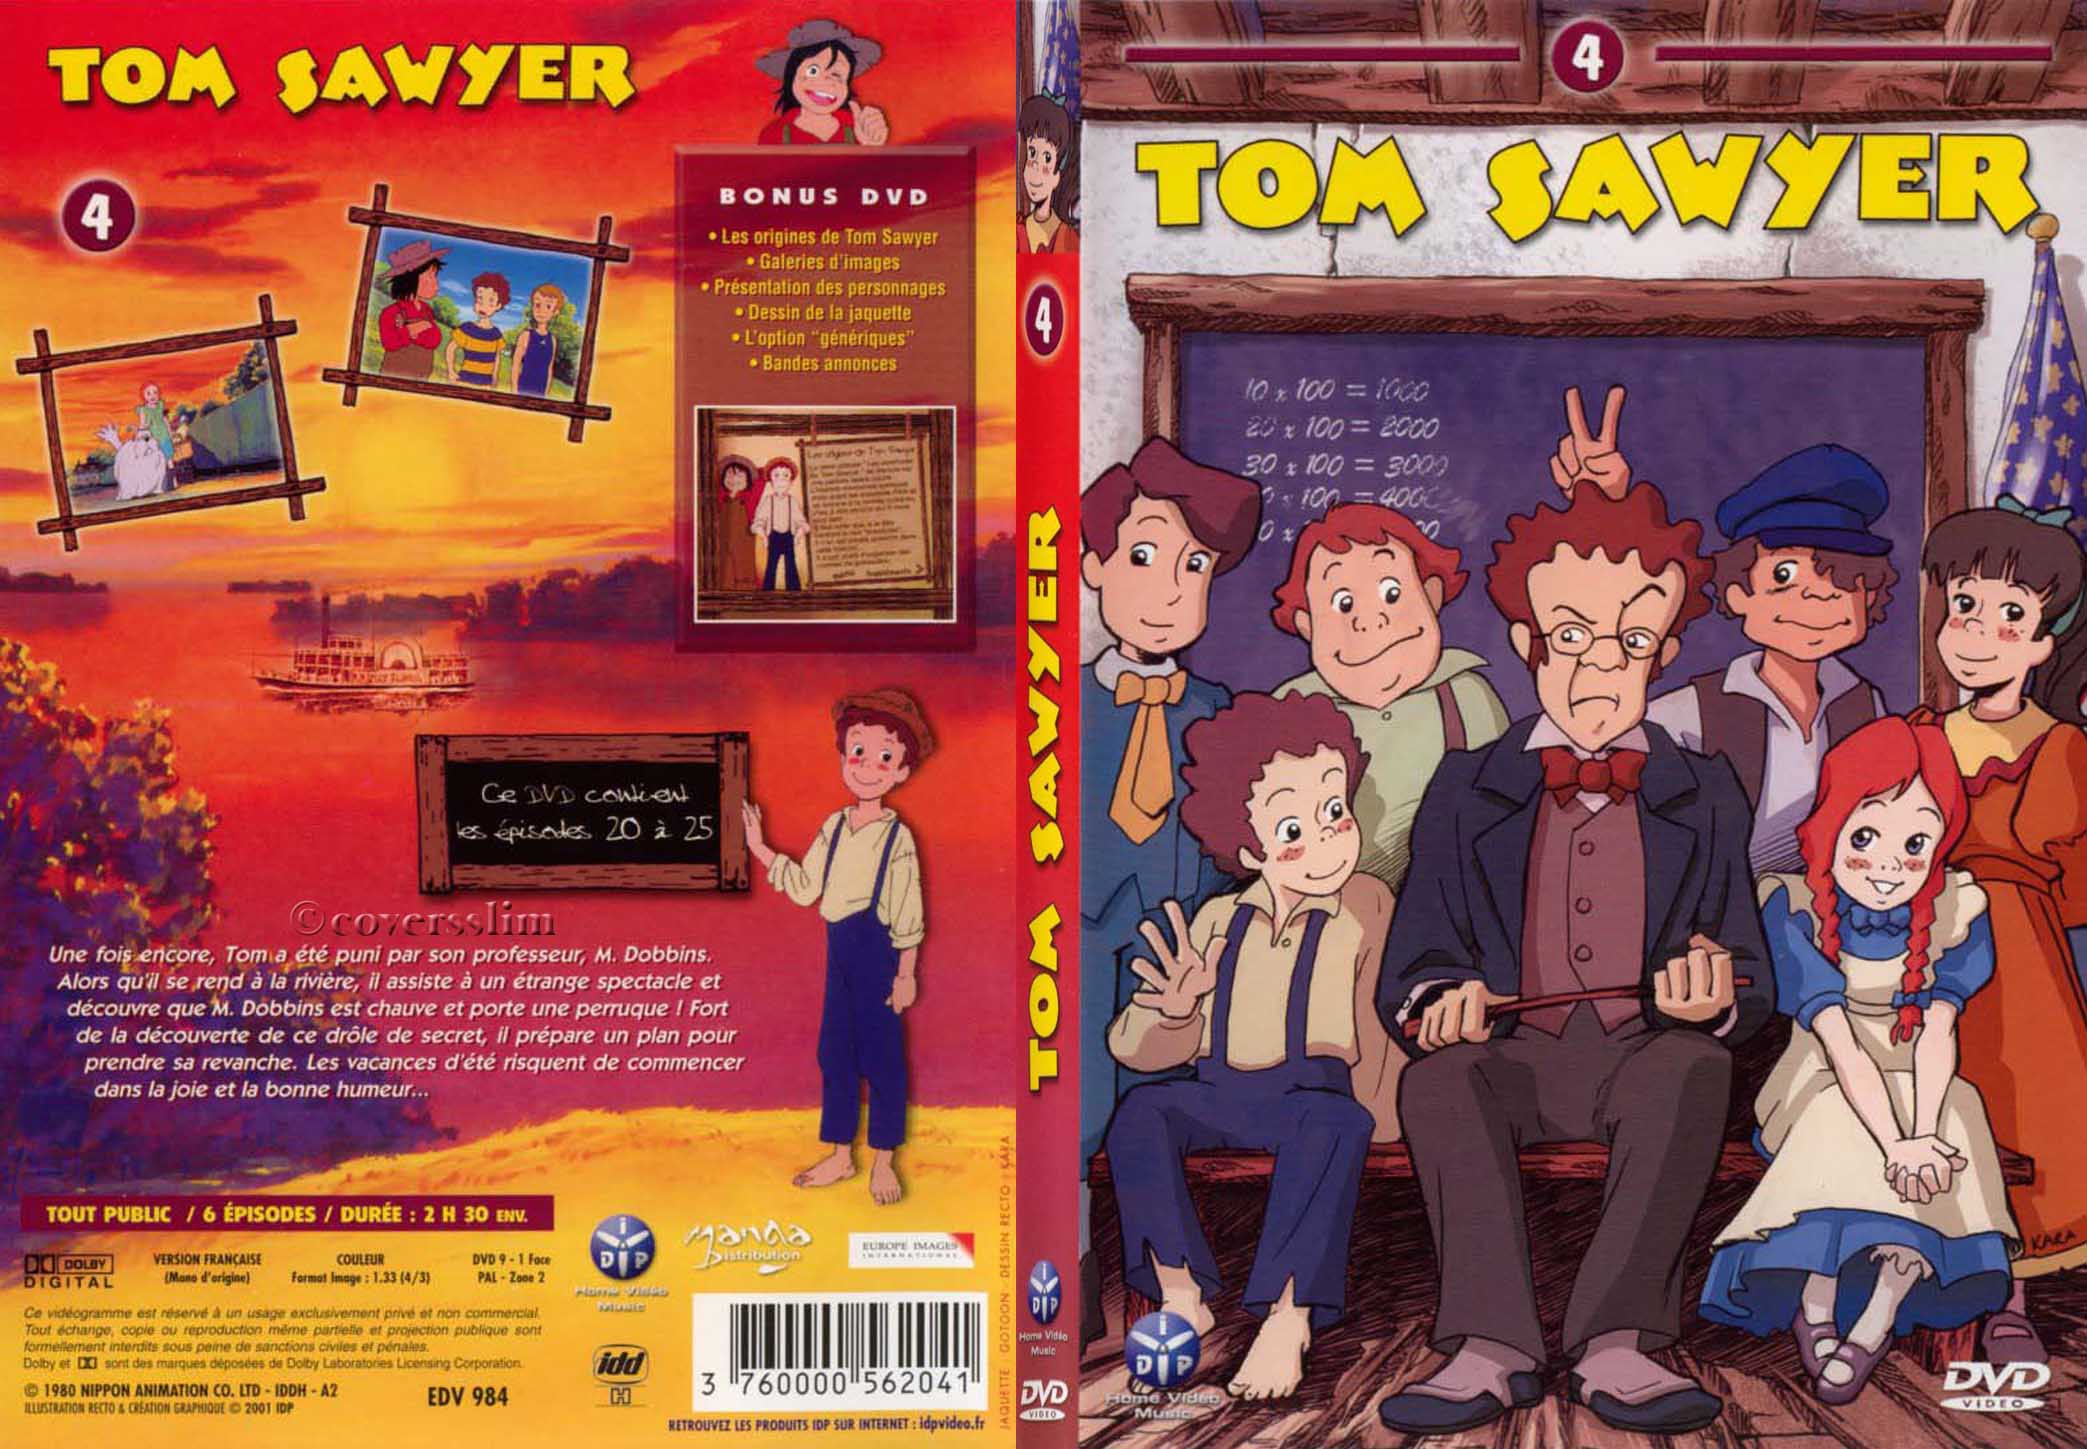 Jaquette DVD Tom Sawyer vol 4 - SLIM v2